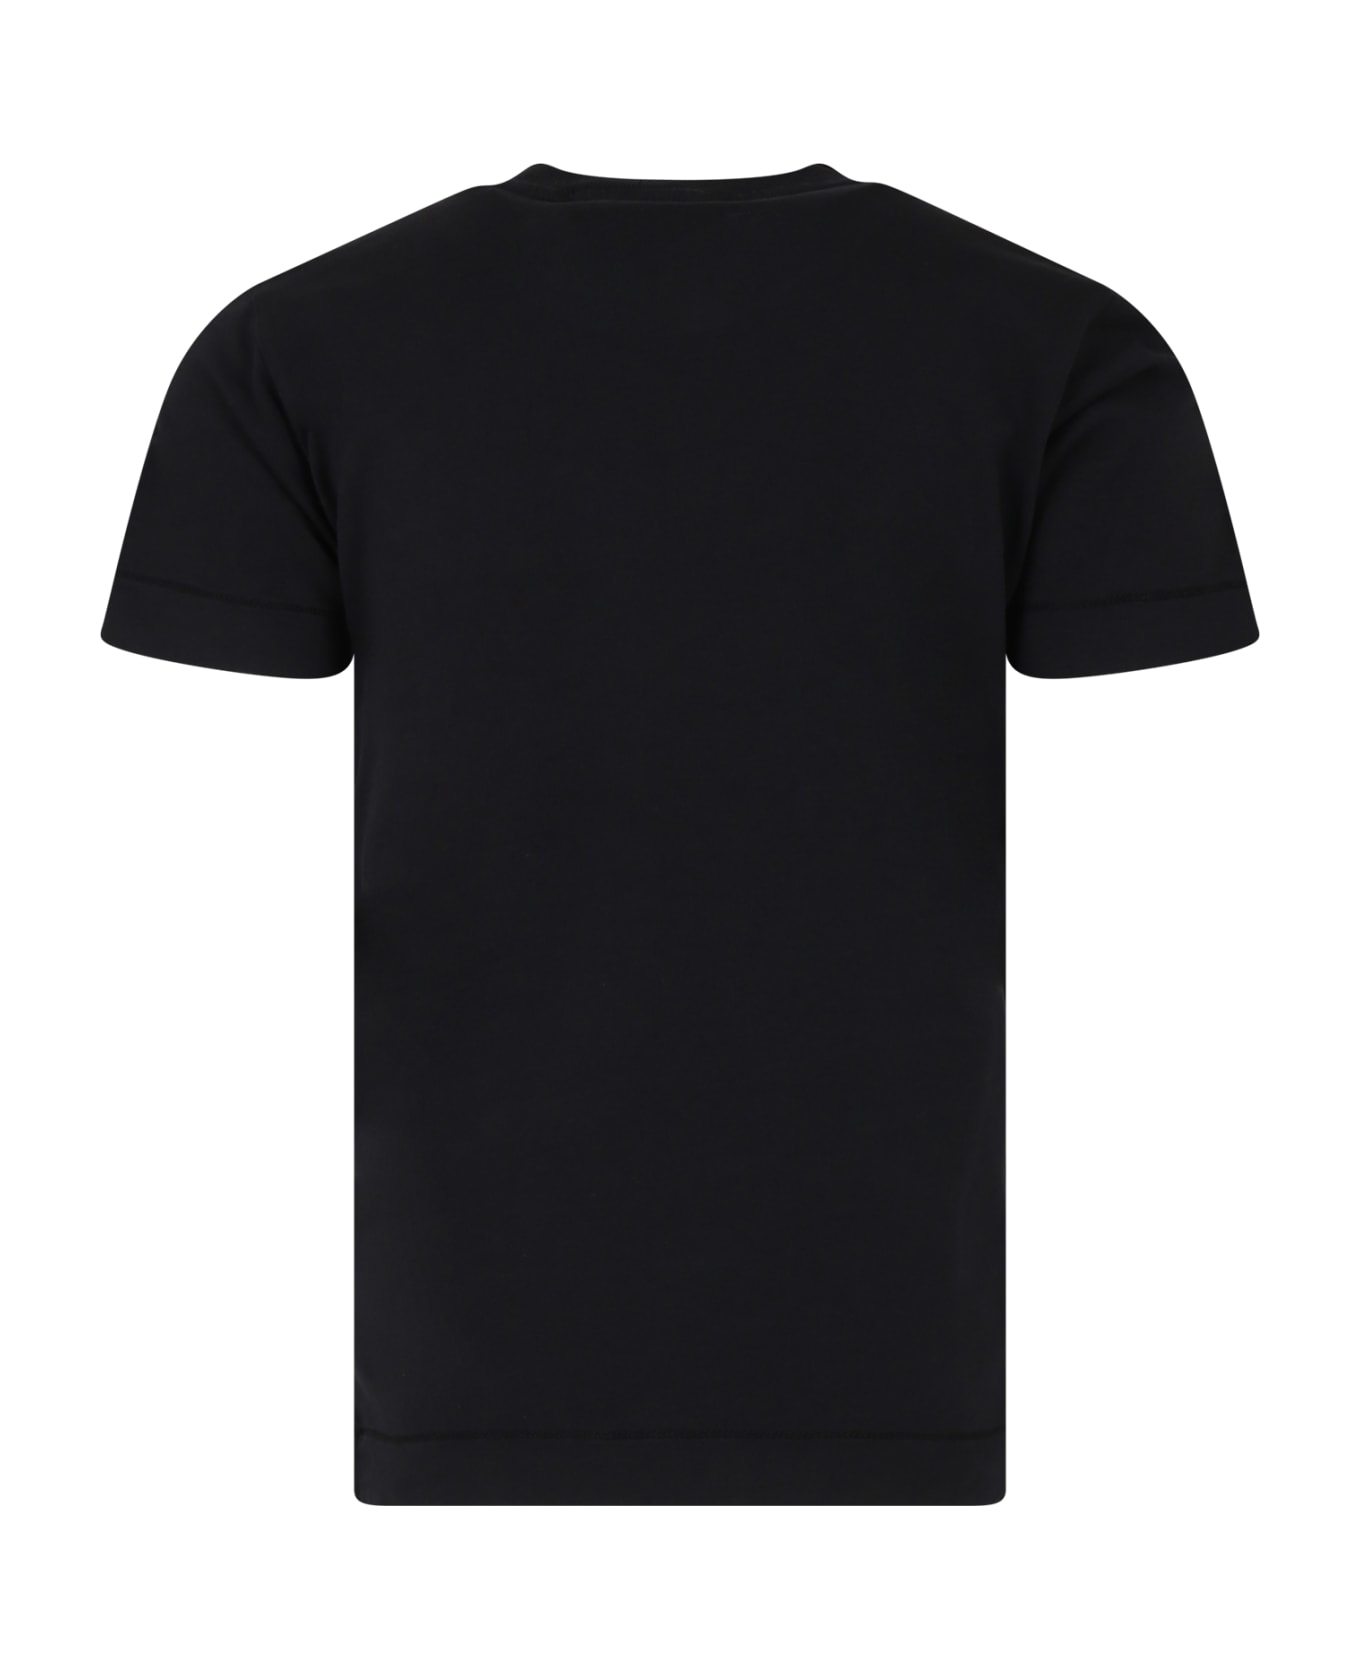 Stone Island Junior Black T-shirt For Boy With Logo - Black